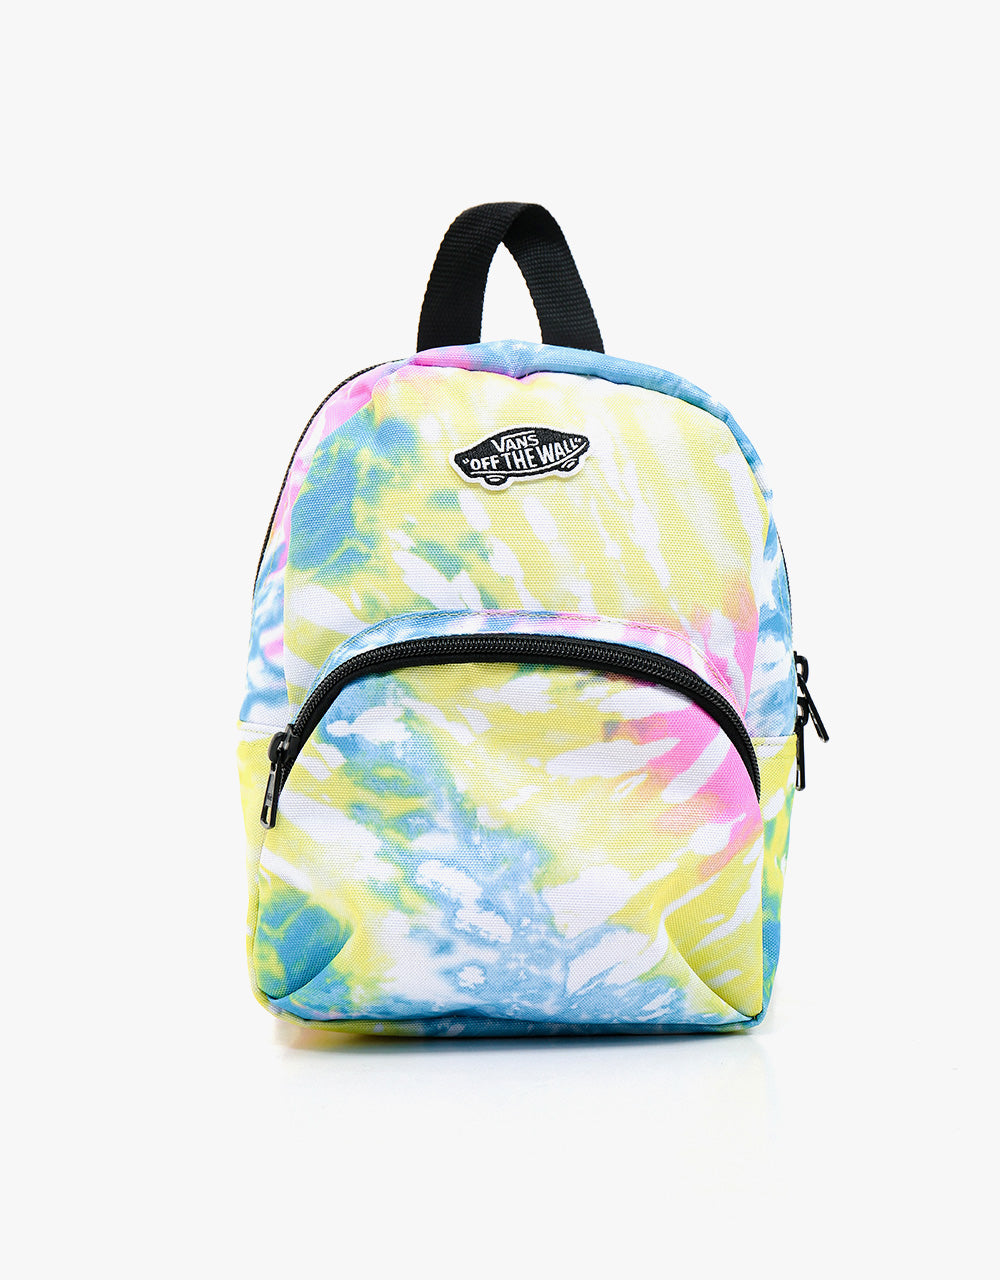 Vans Womens Got This Mini Backpack - Tie Dye Orchid